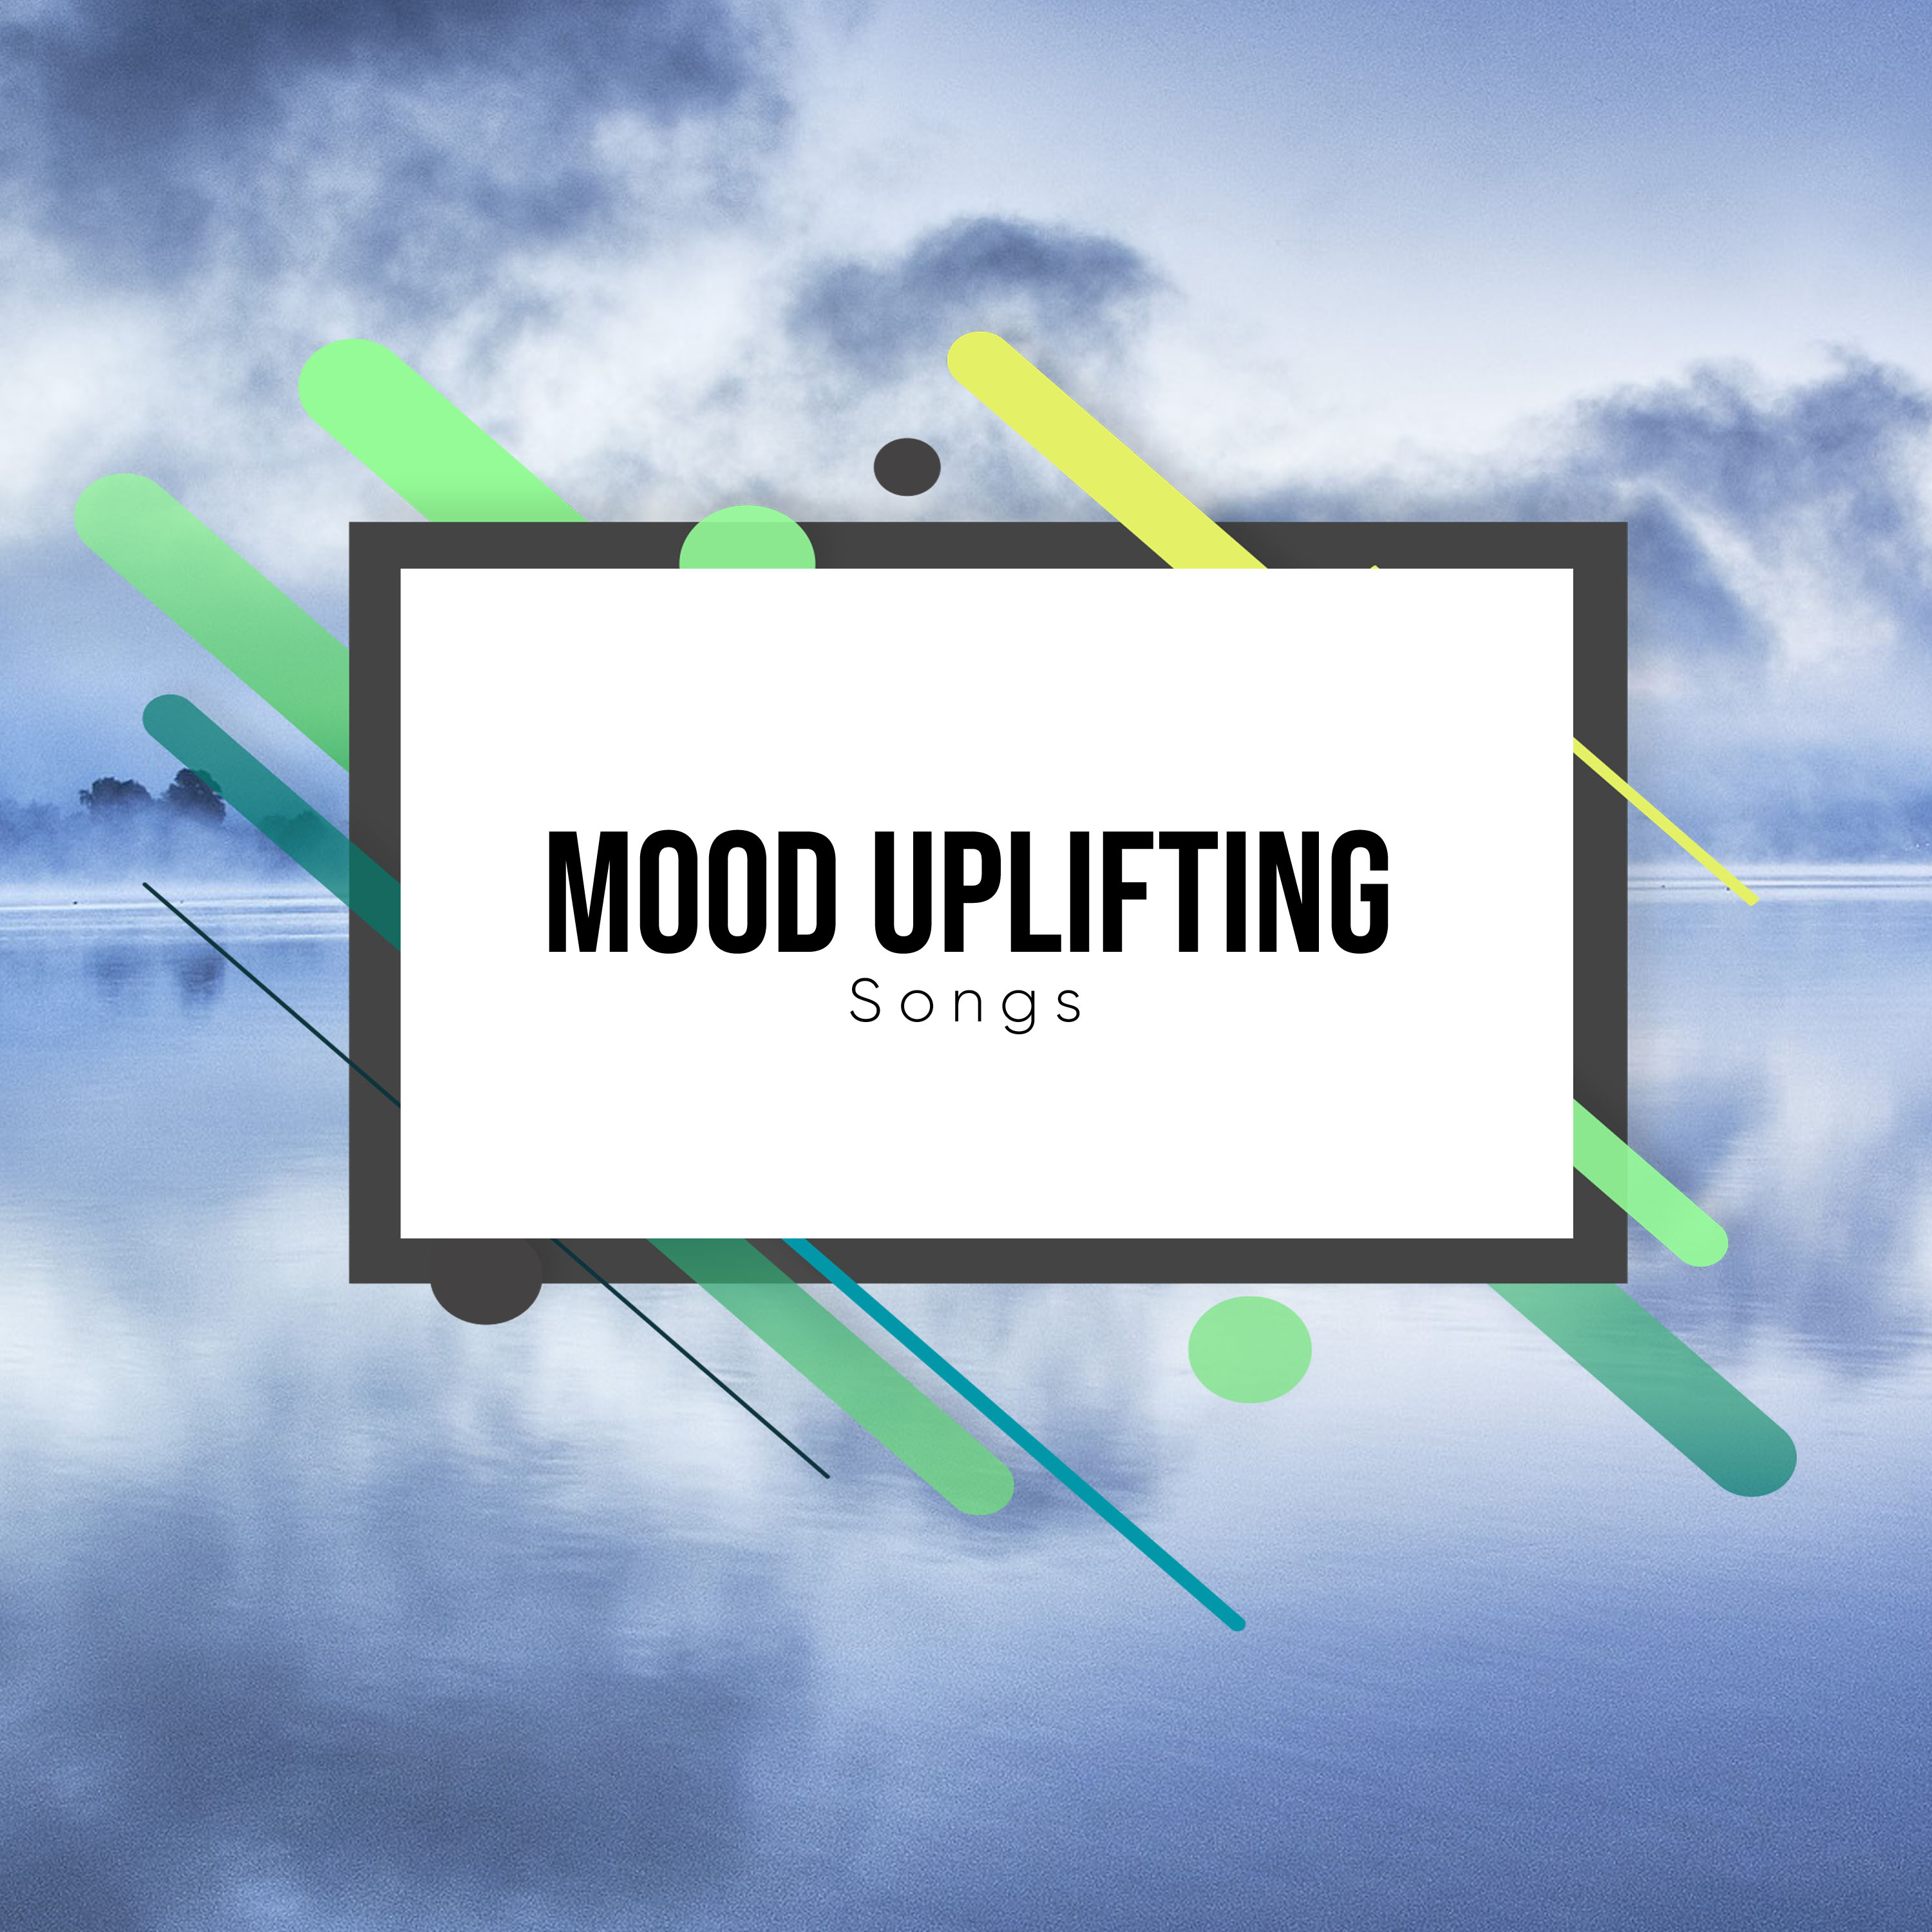 #19 Mood Uplifting Songs for Rejuvenation